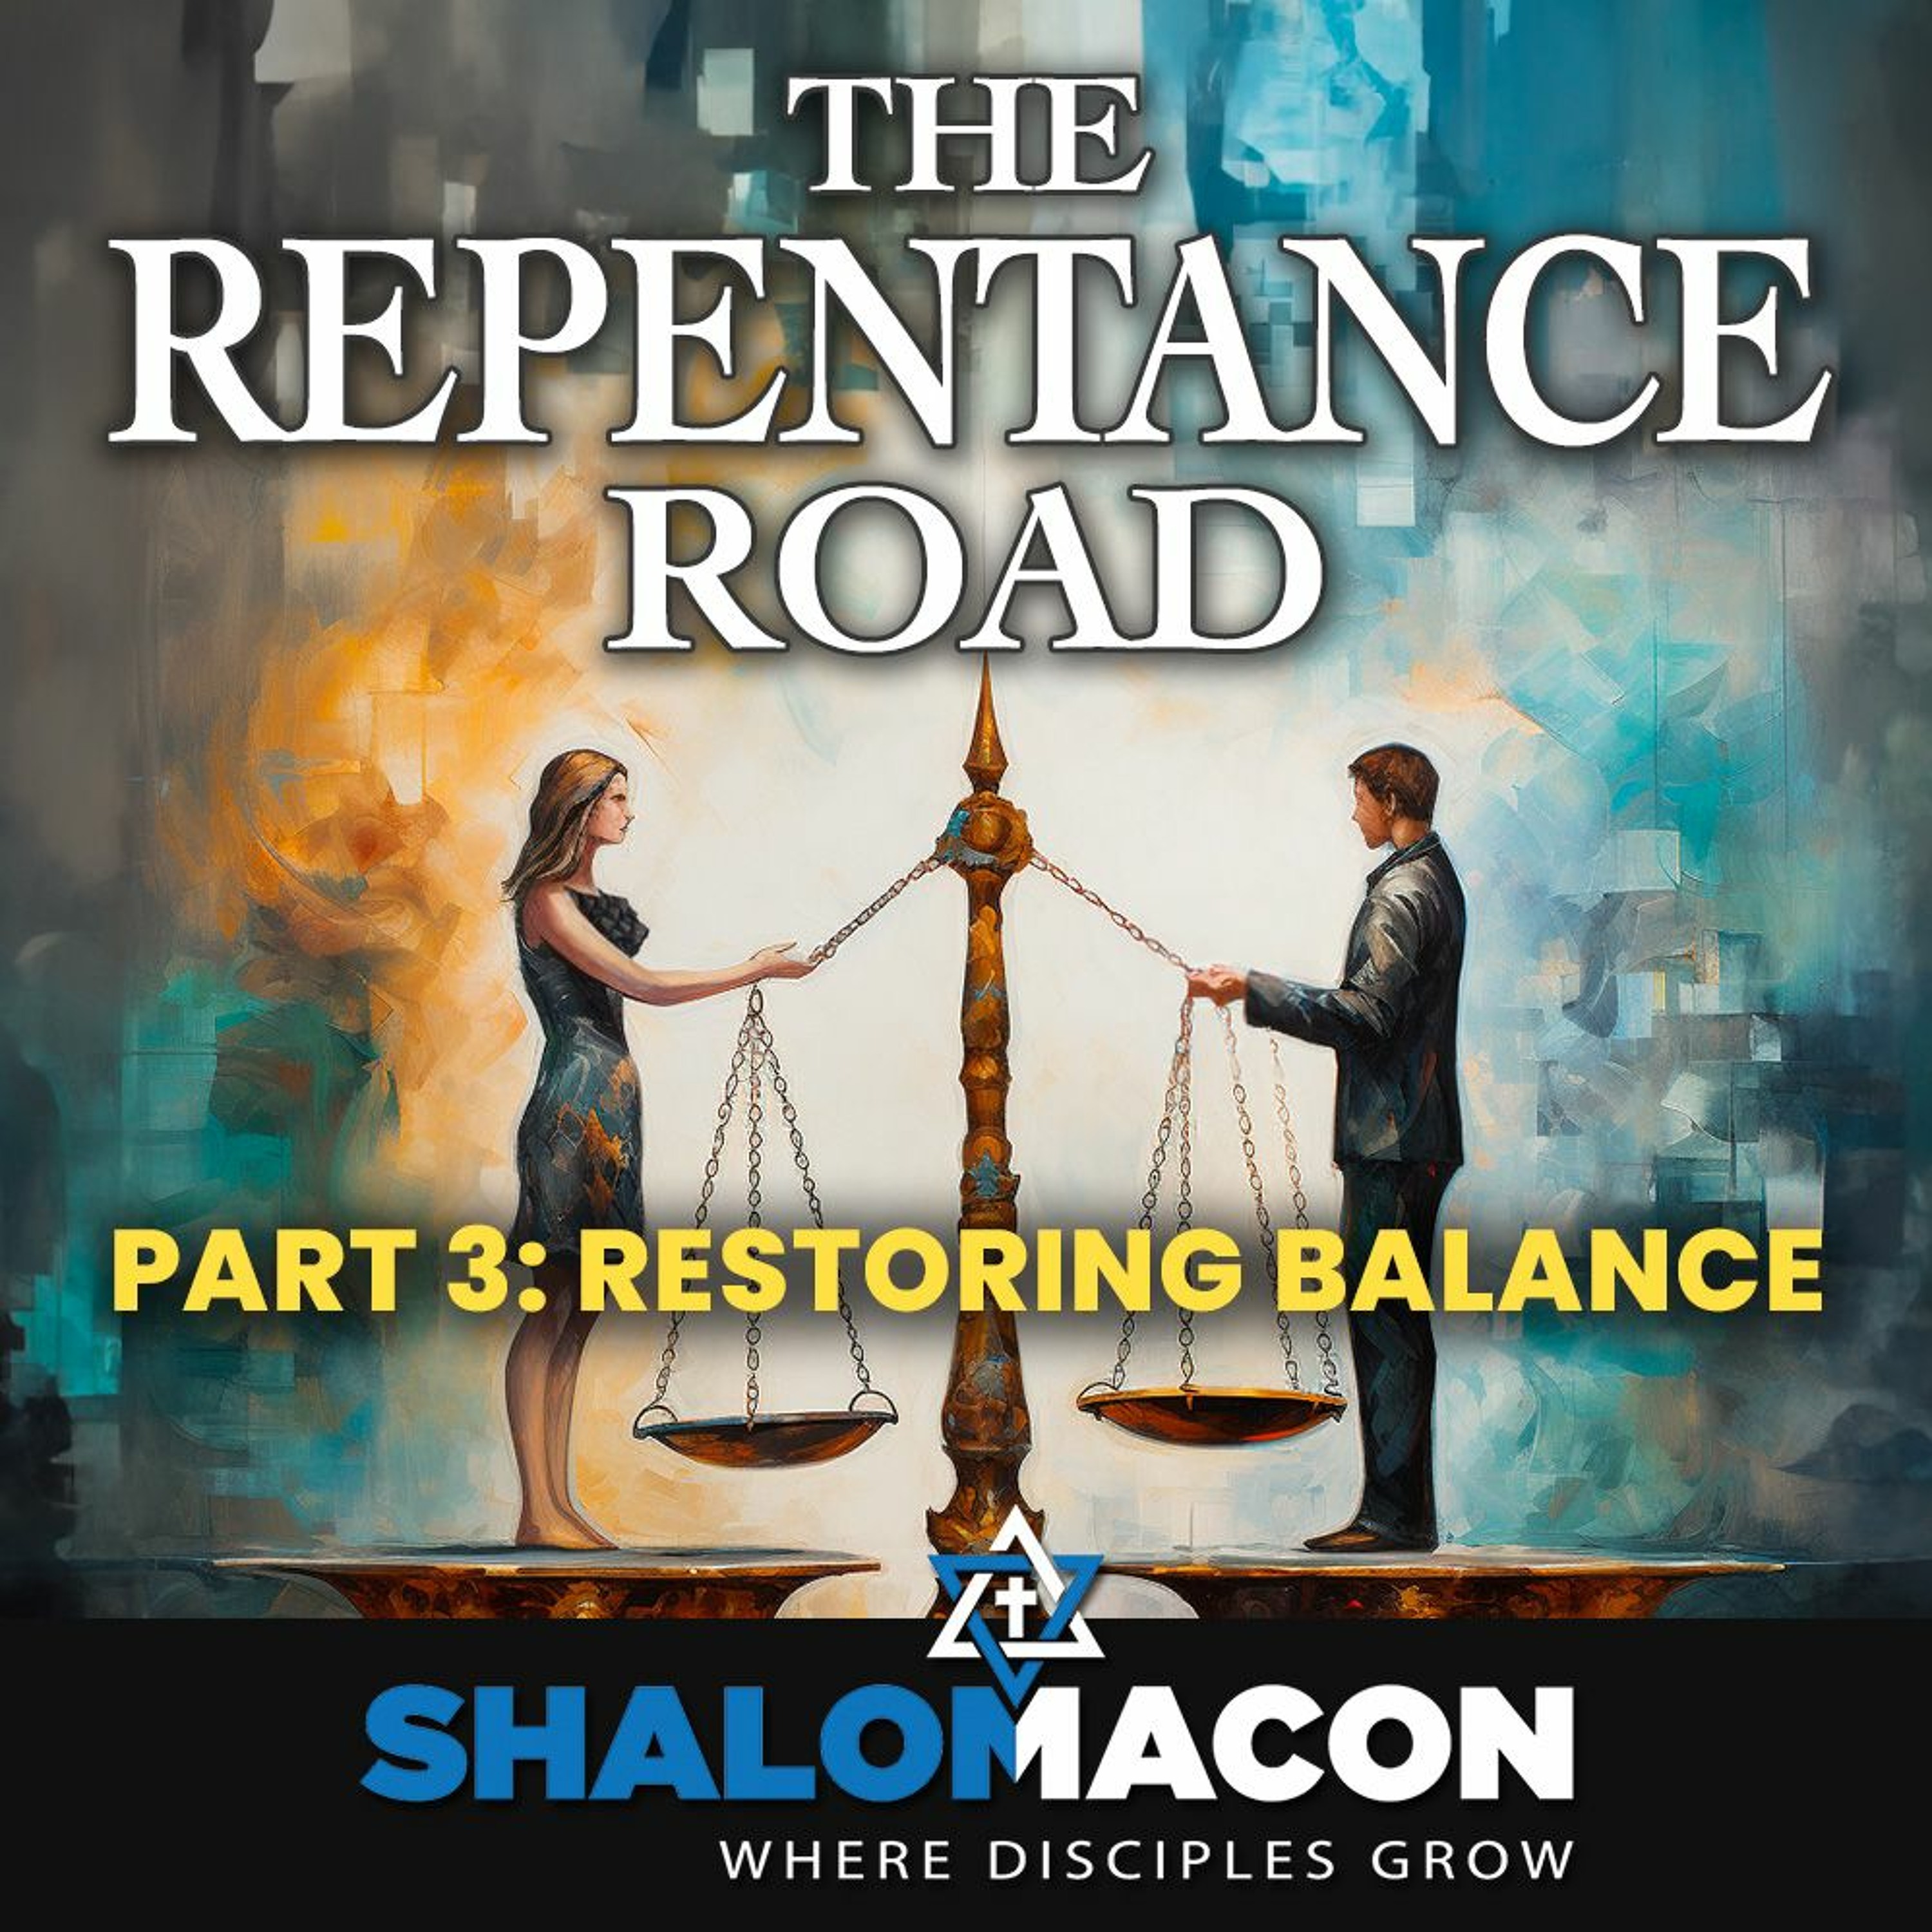 The Repentance Road, Part 3: Restoring Balance